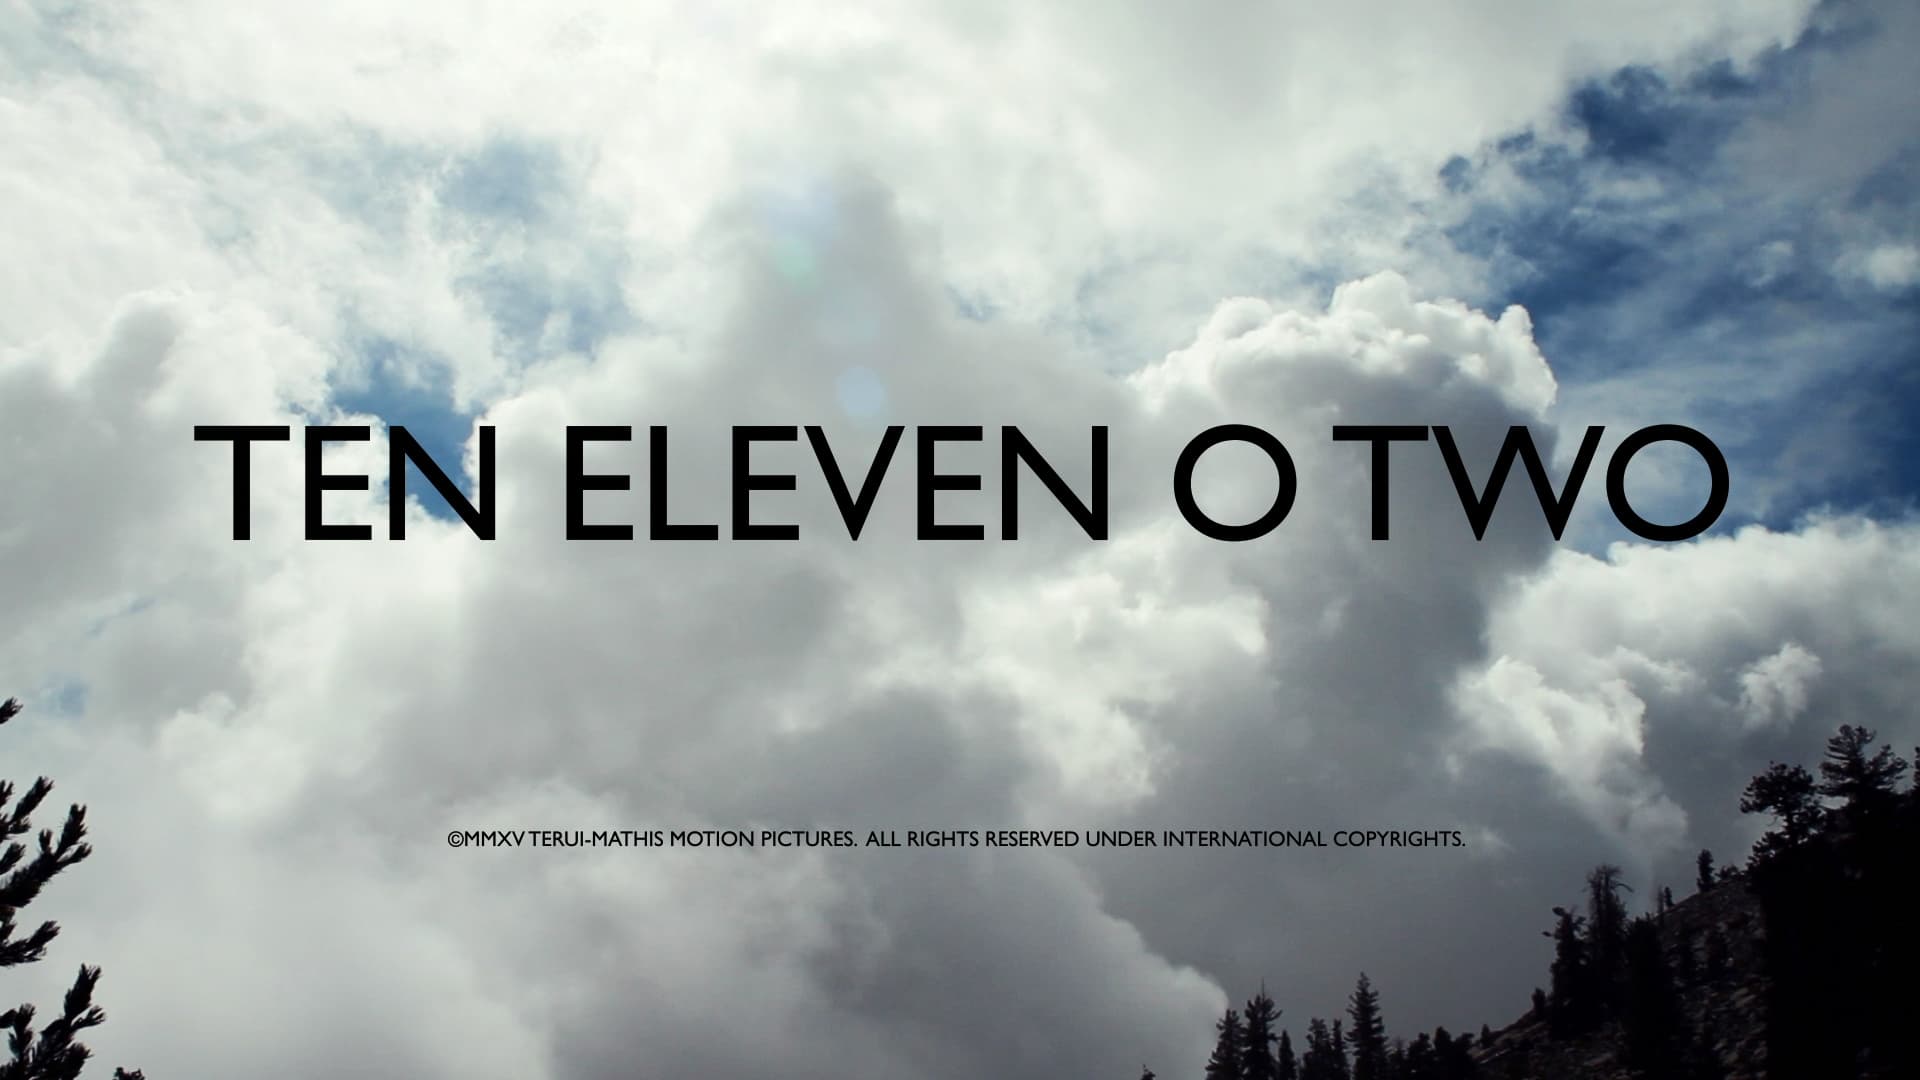 Ten Eleven O Two (2016)